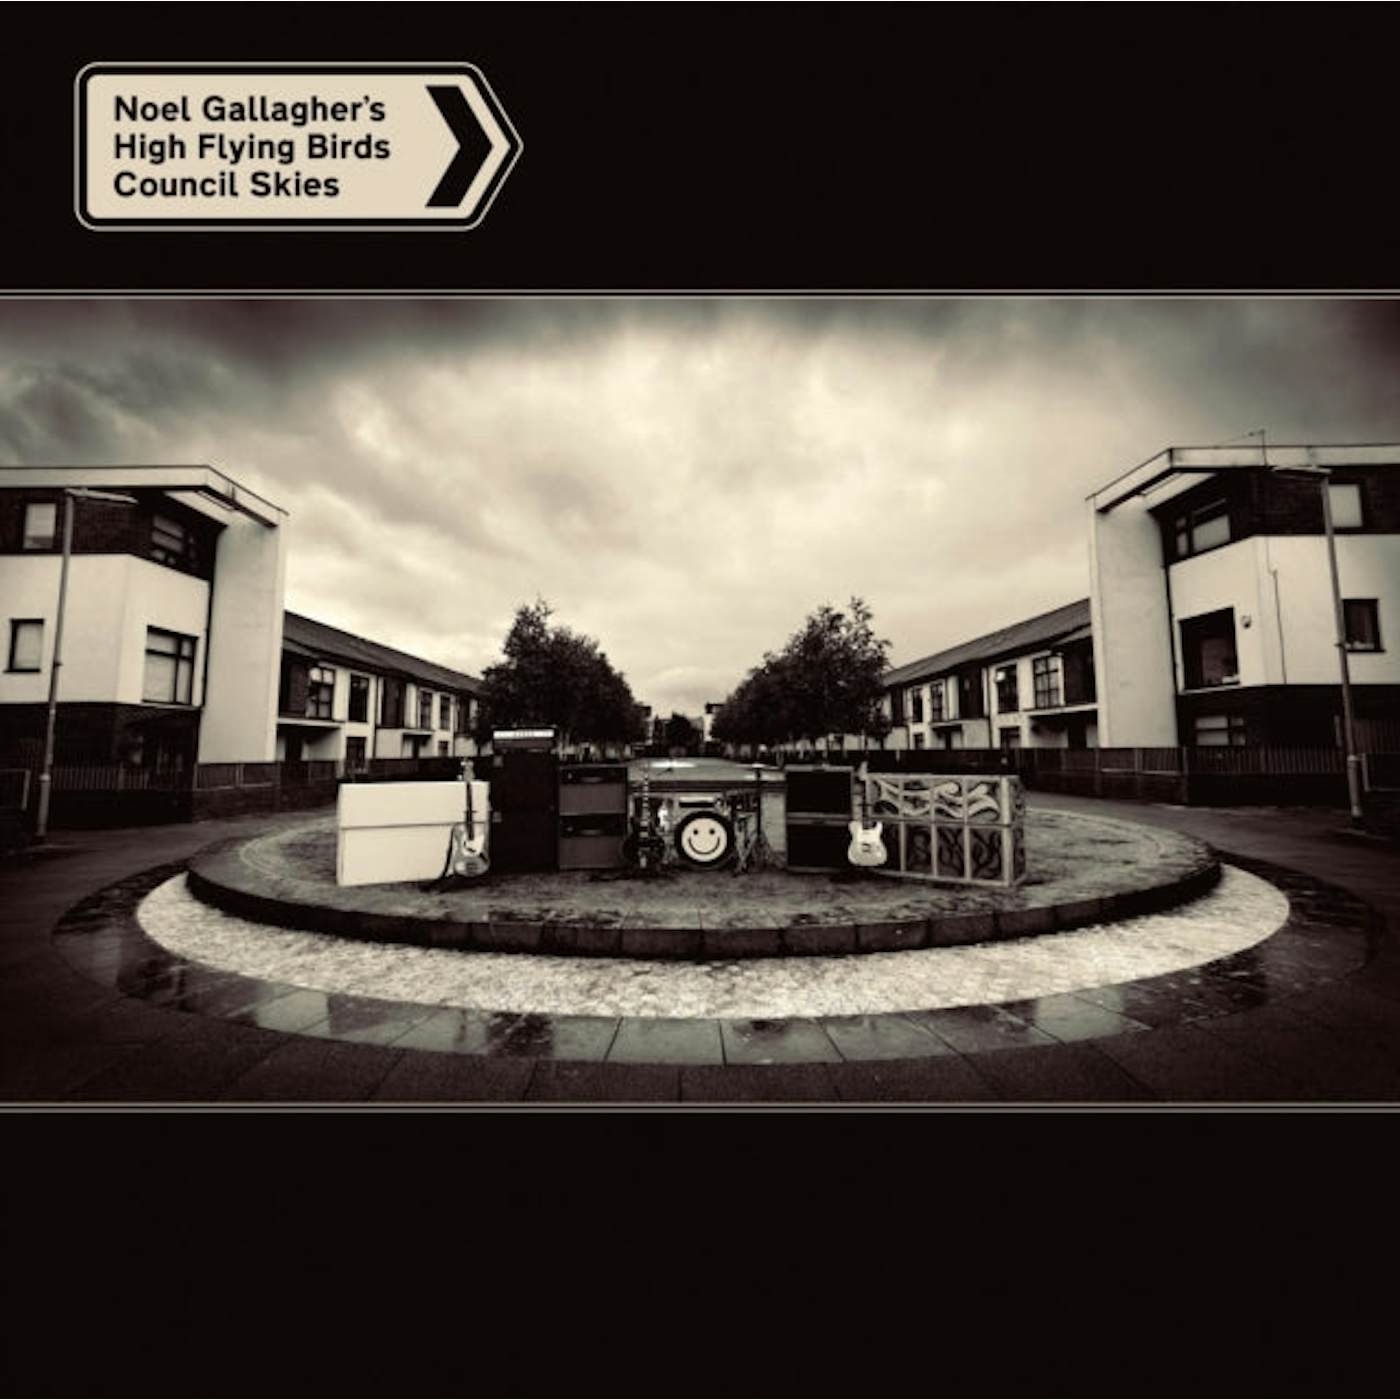 Noel Gallagher's High Flying Birds LP - Council Skies (Vinyl)